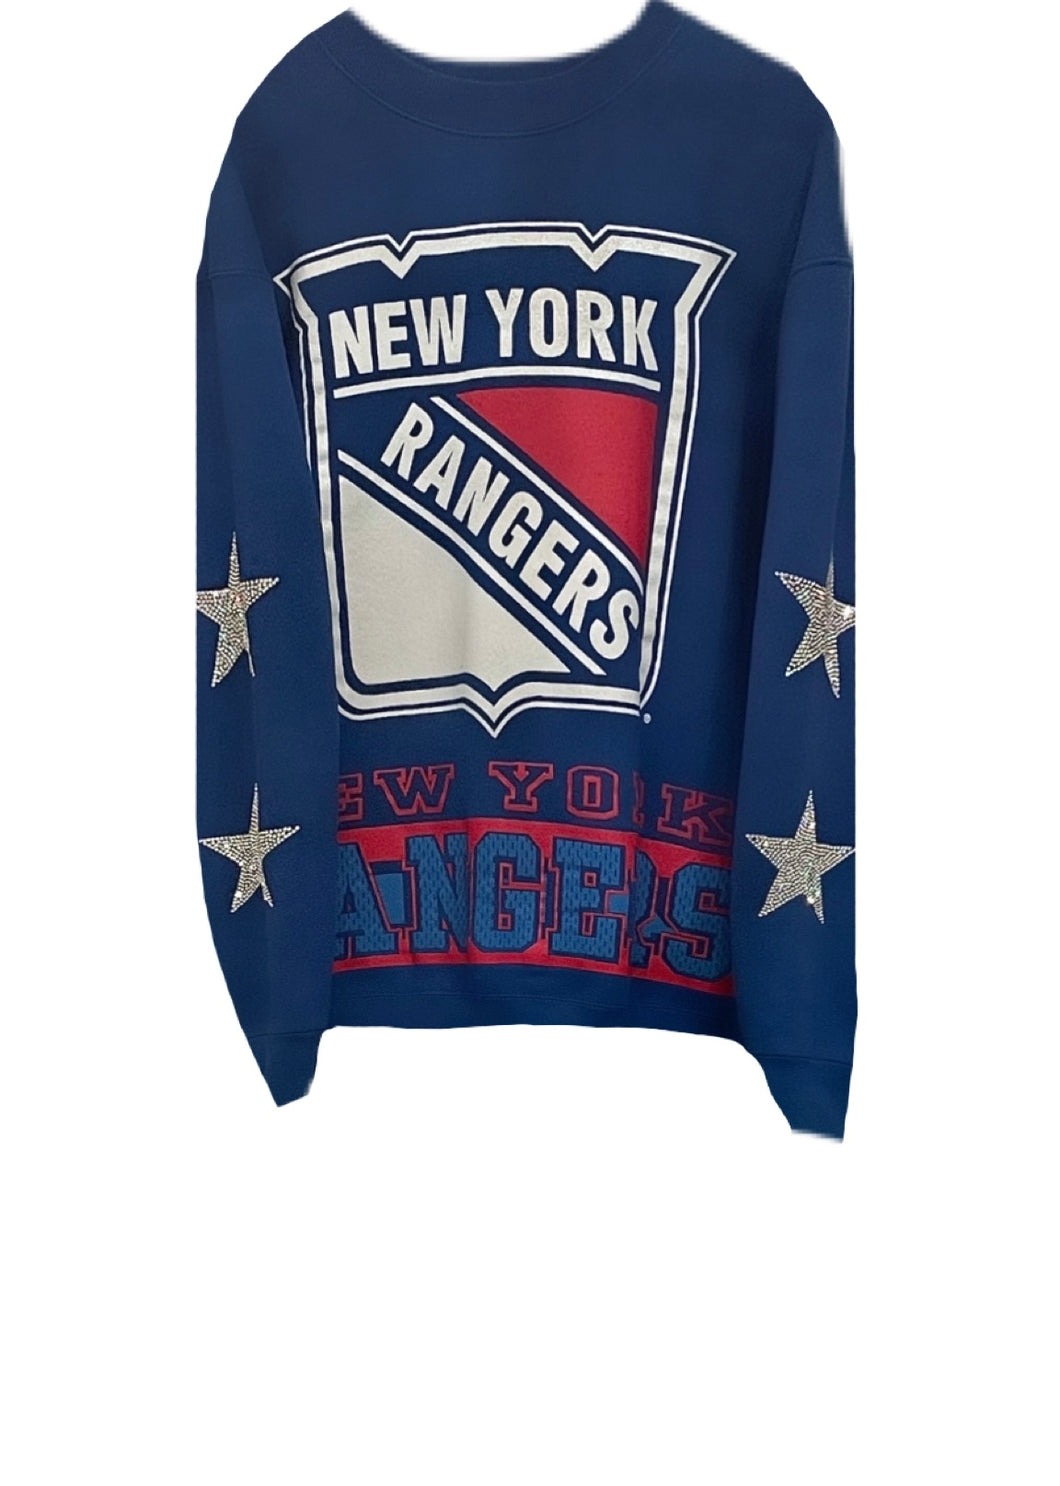 Vintage New York Rangers NHL Hockey Sweatshirt